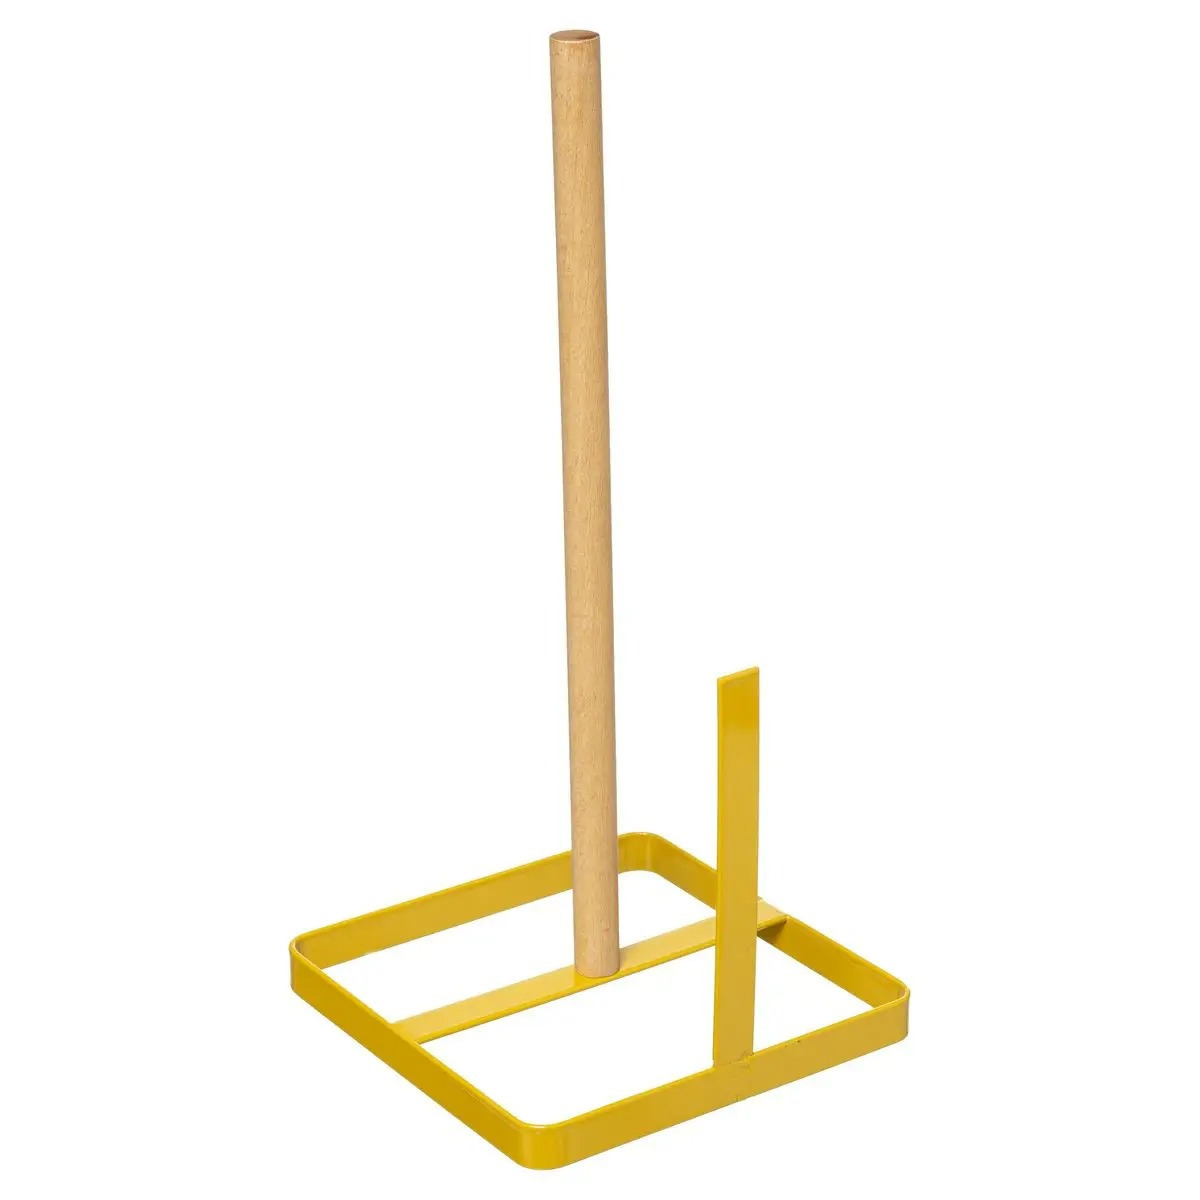 Keukenrolhouder ijzer-hout 15 x 30 cm geel